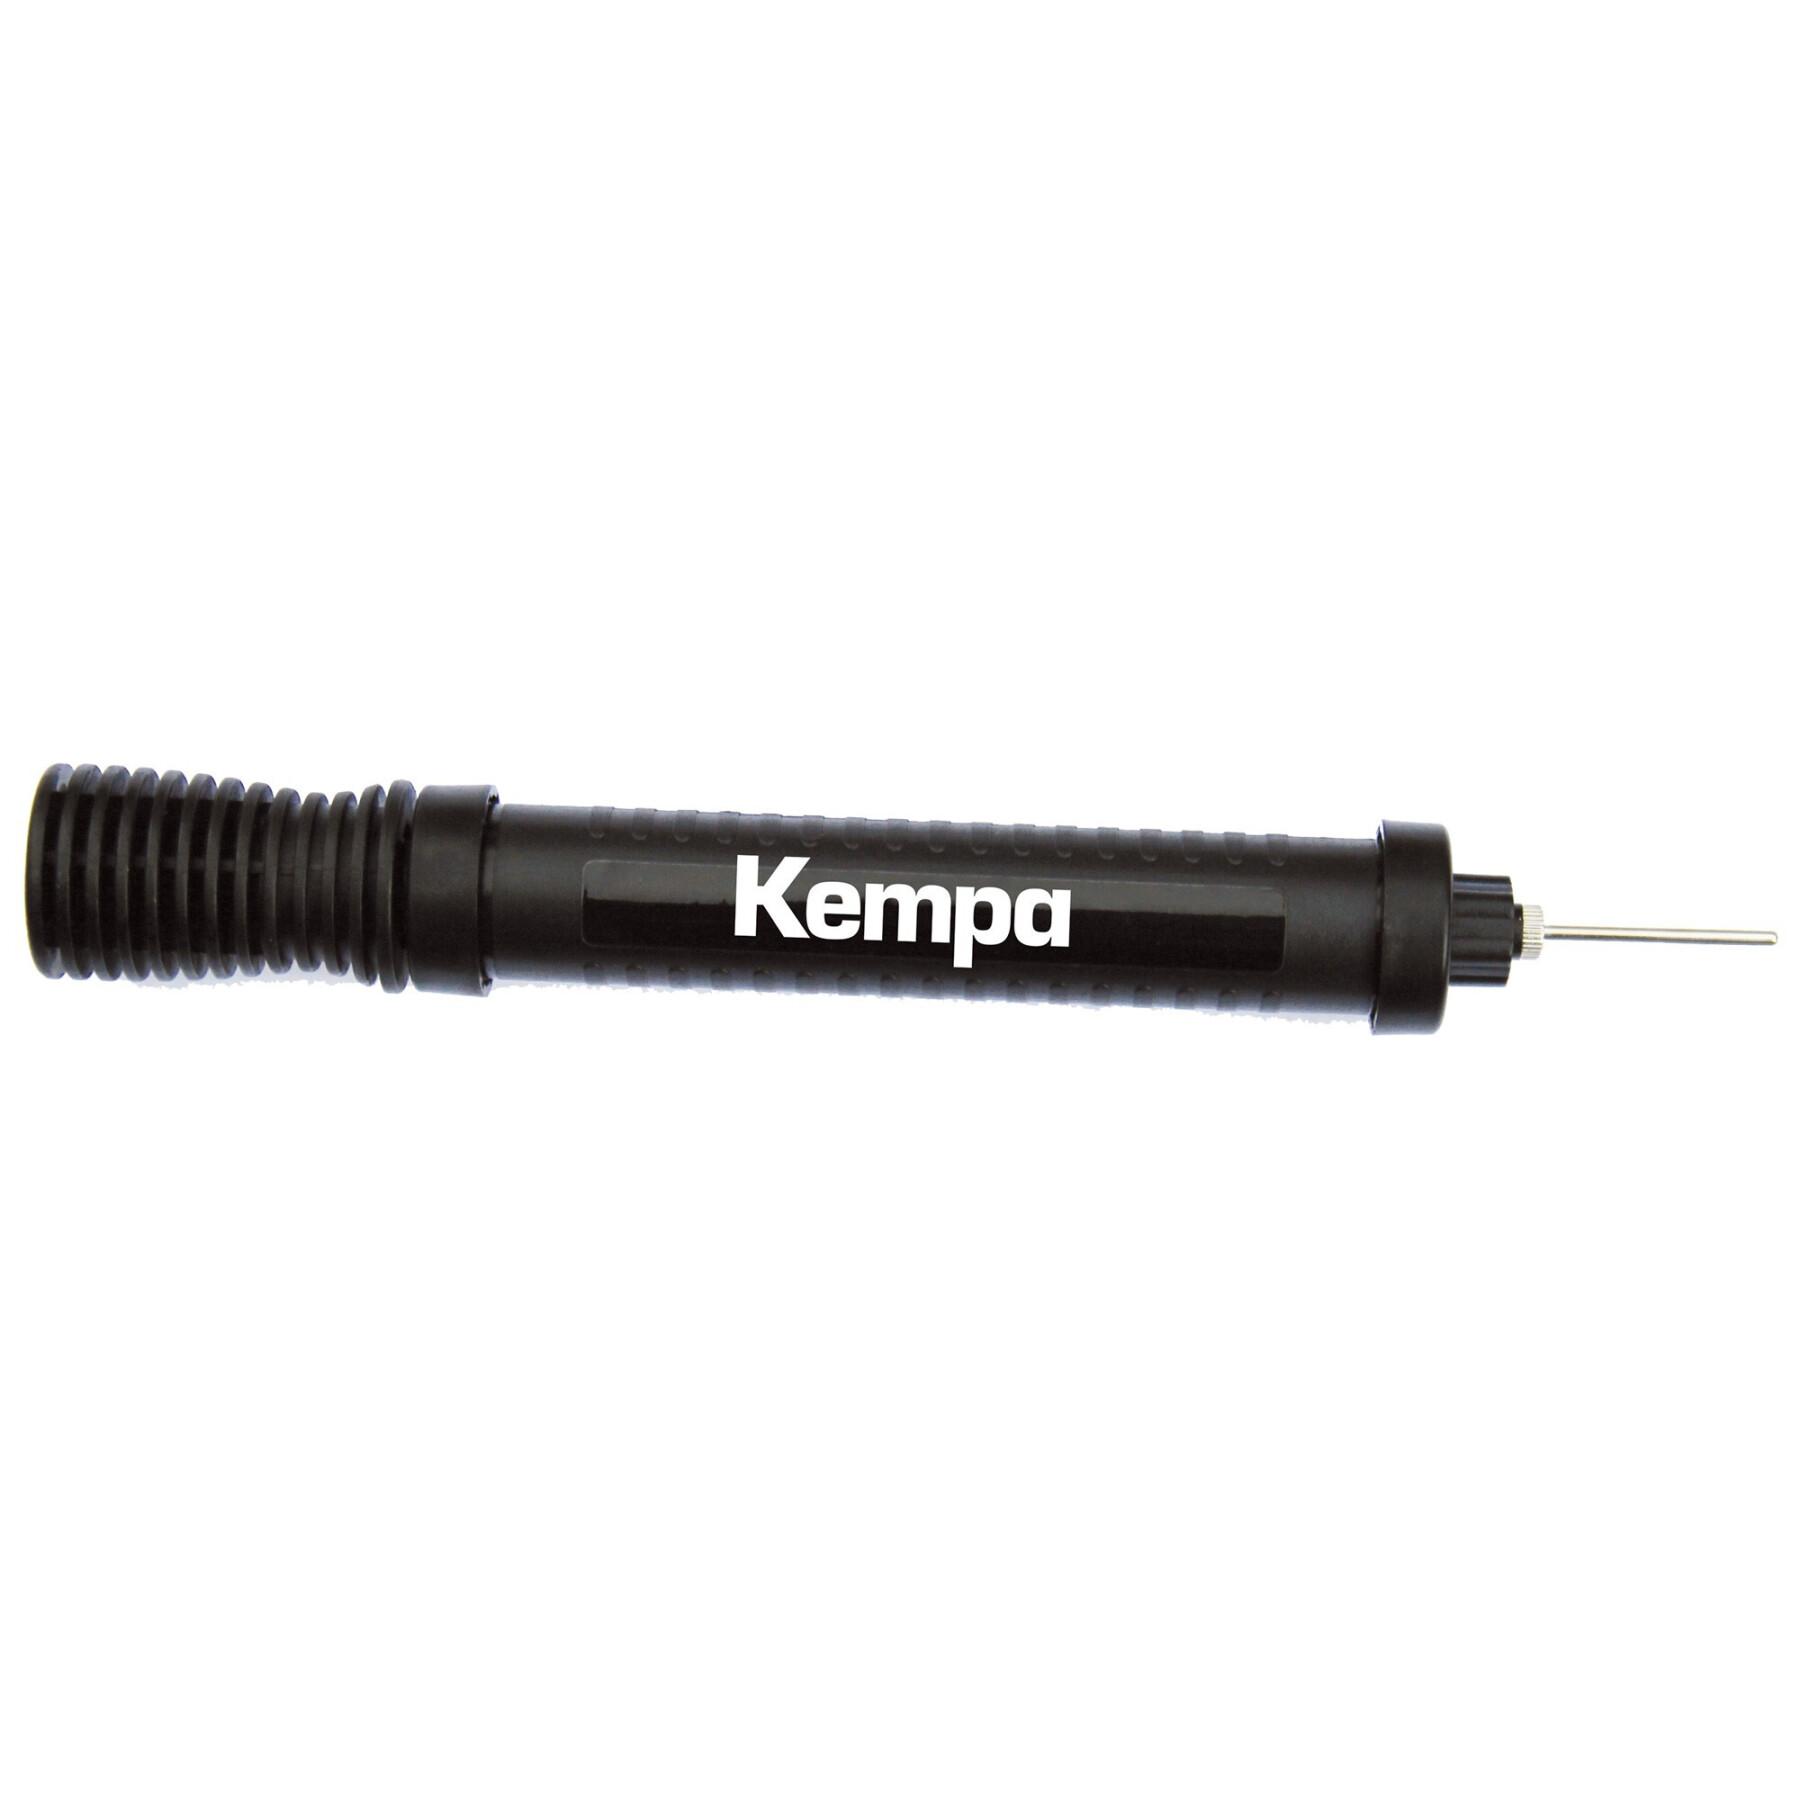 Pompa Kempa double-sens